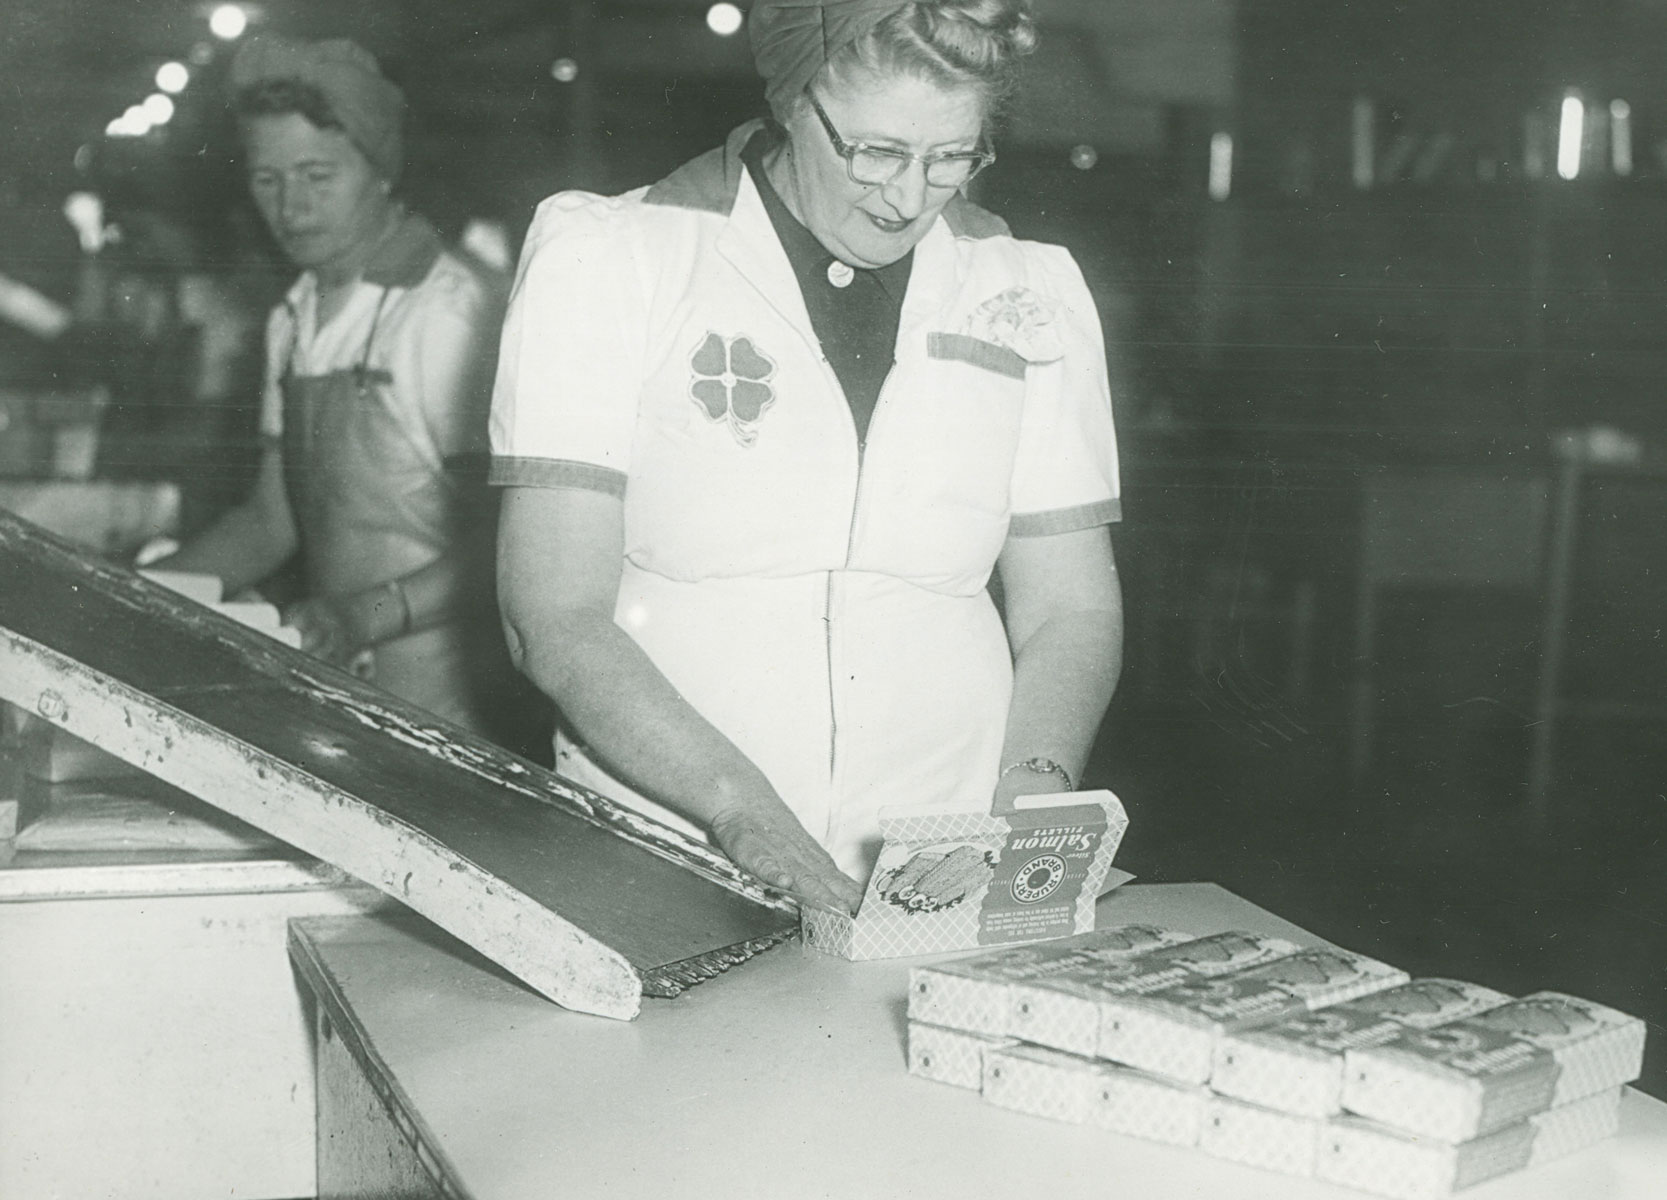 Women in Cloverleaf uniforms packing Rupert Brand frozen salmon fillets in boxes.